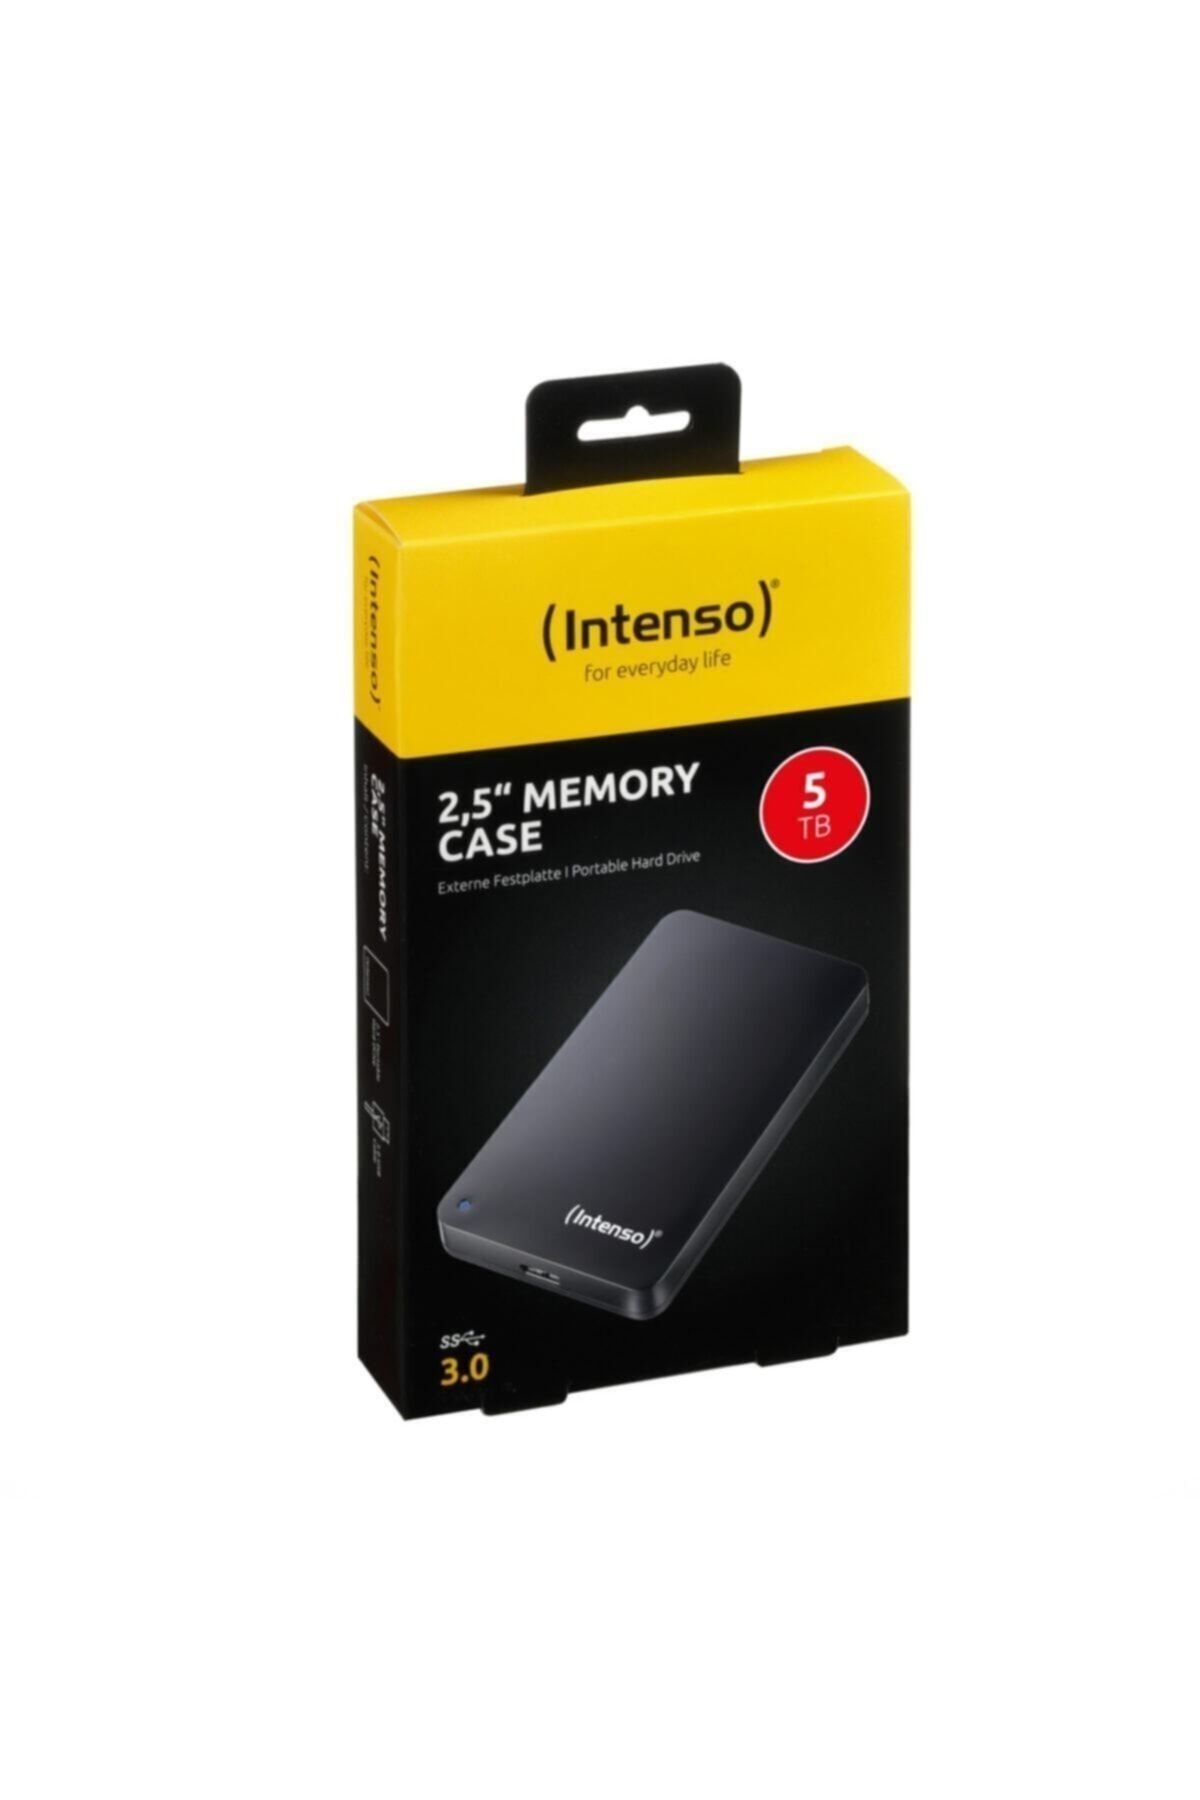 Intenso Memory Case 6021513 5 Tb 2.5" Usb 3.0 Taşınabilir Disk